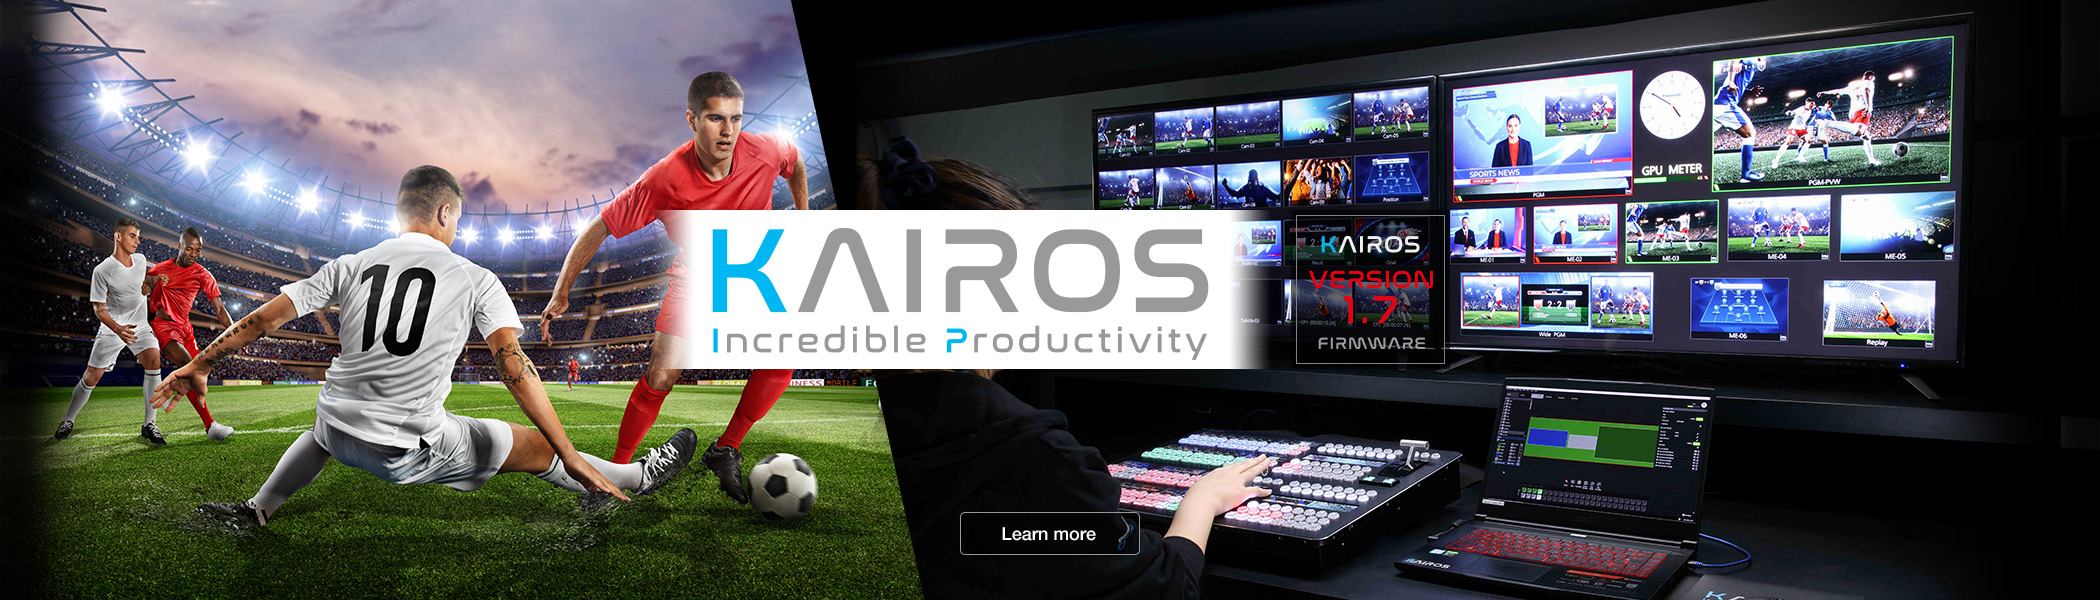 KAIROS Incredible Productivity KAIROS VERSION 1.7 FIRMWARE